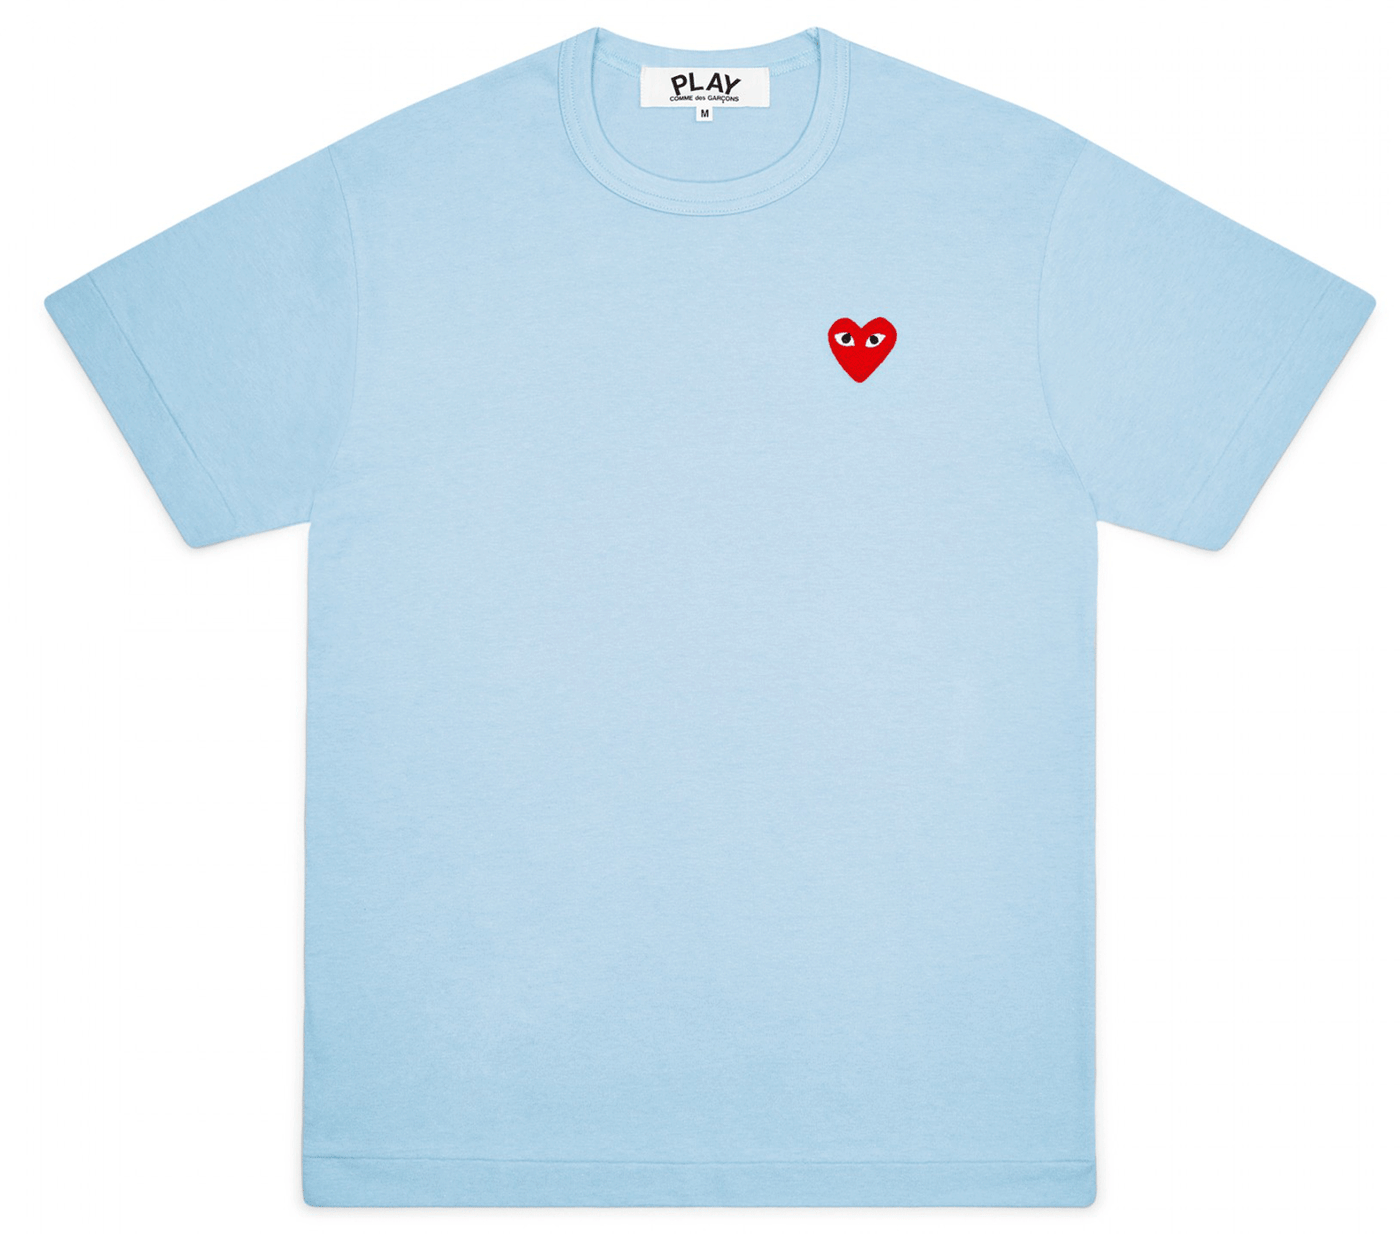 Comme-des-Garcons-Play-Bright-Red-Heart-T-Shirt-Men-Blue-1